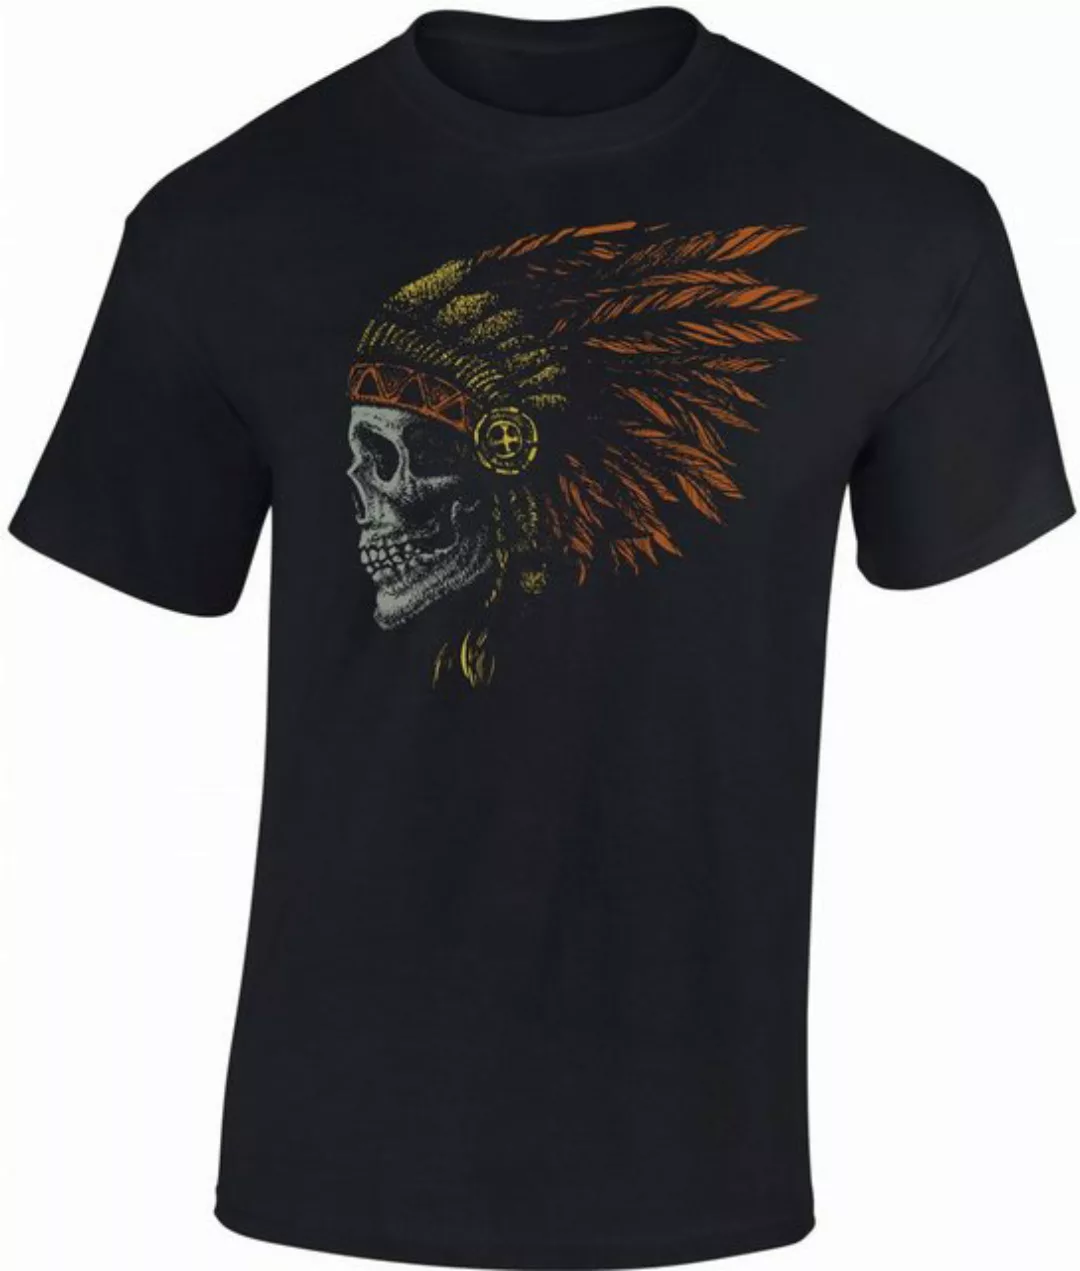 Baddery Print-Shirt Biker Tshirt : "Indian Skull" - T-Shirt Motorrad Gesche günstig online kaufen